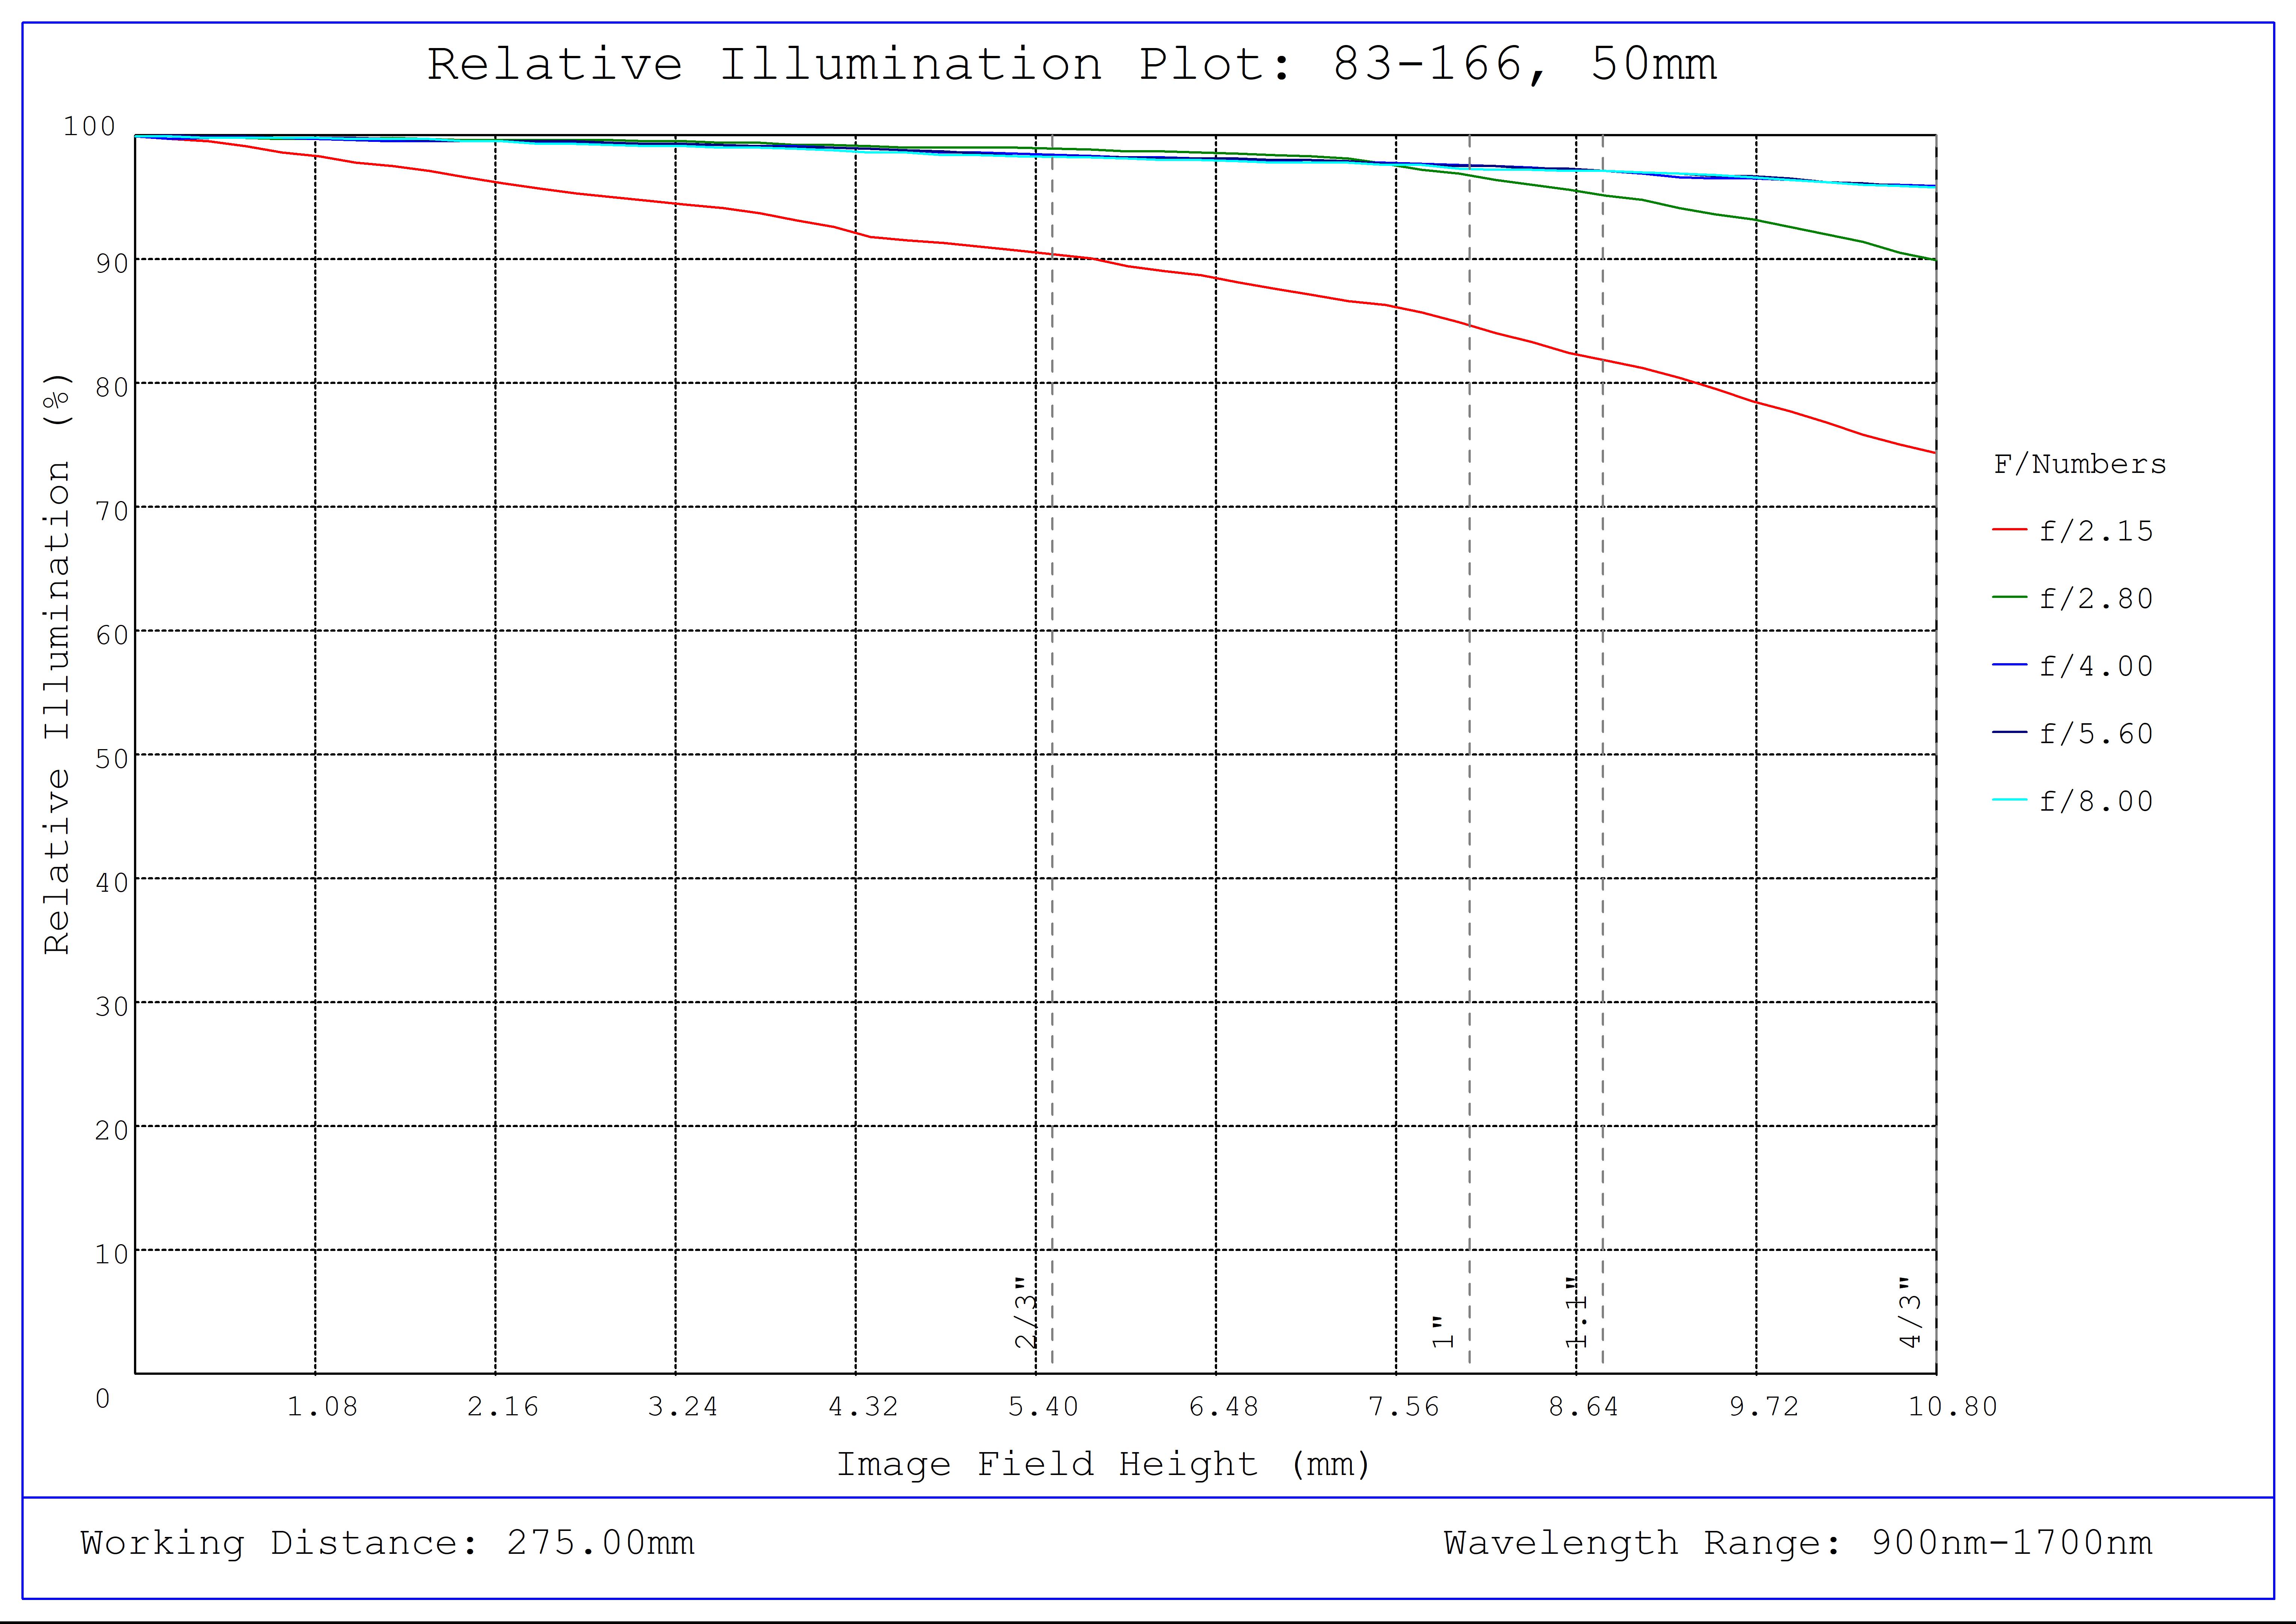 #83-166, 50mm SWIR Series Fixed Focal Length Lens, F-Mount, Relative Illumination Plot